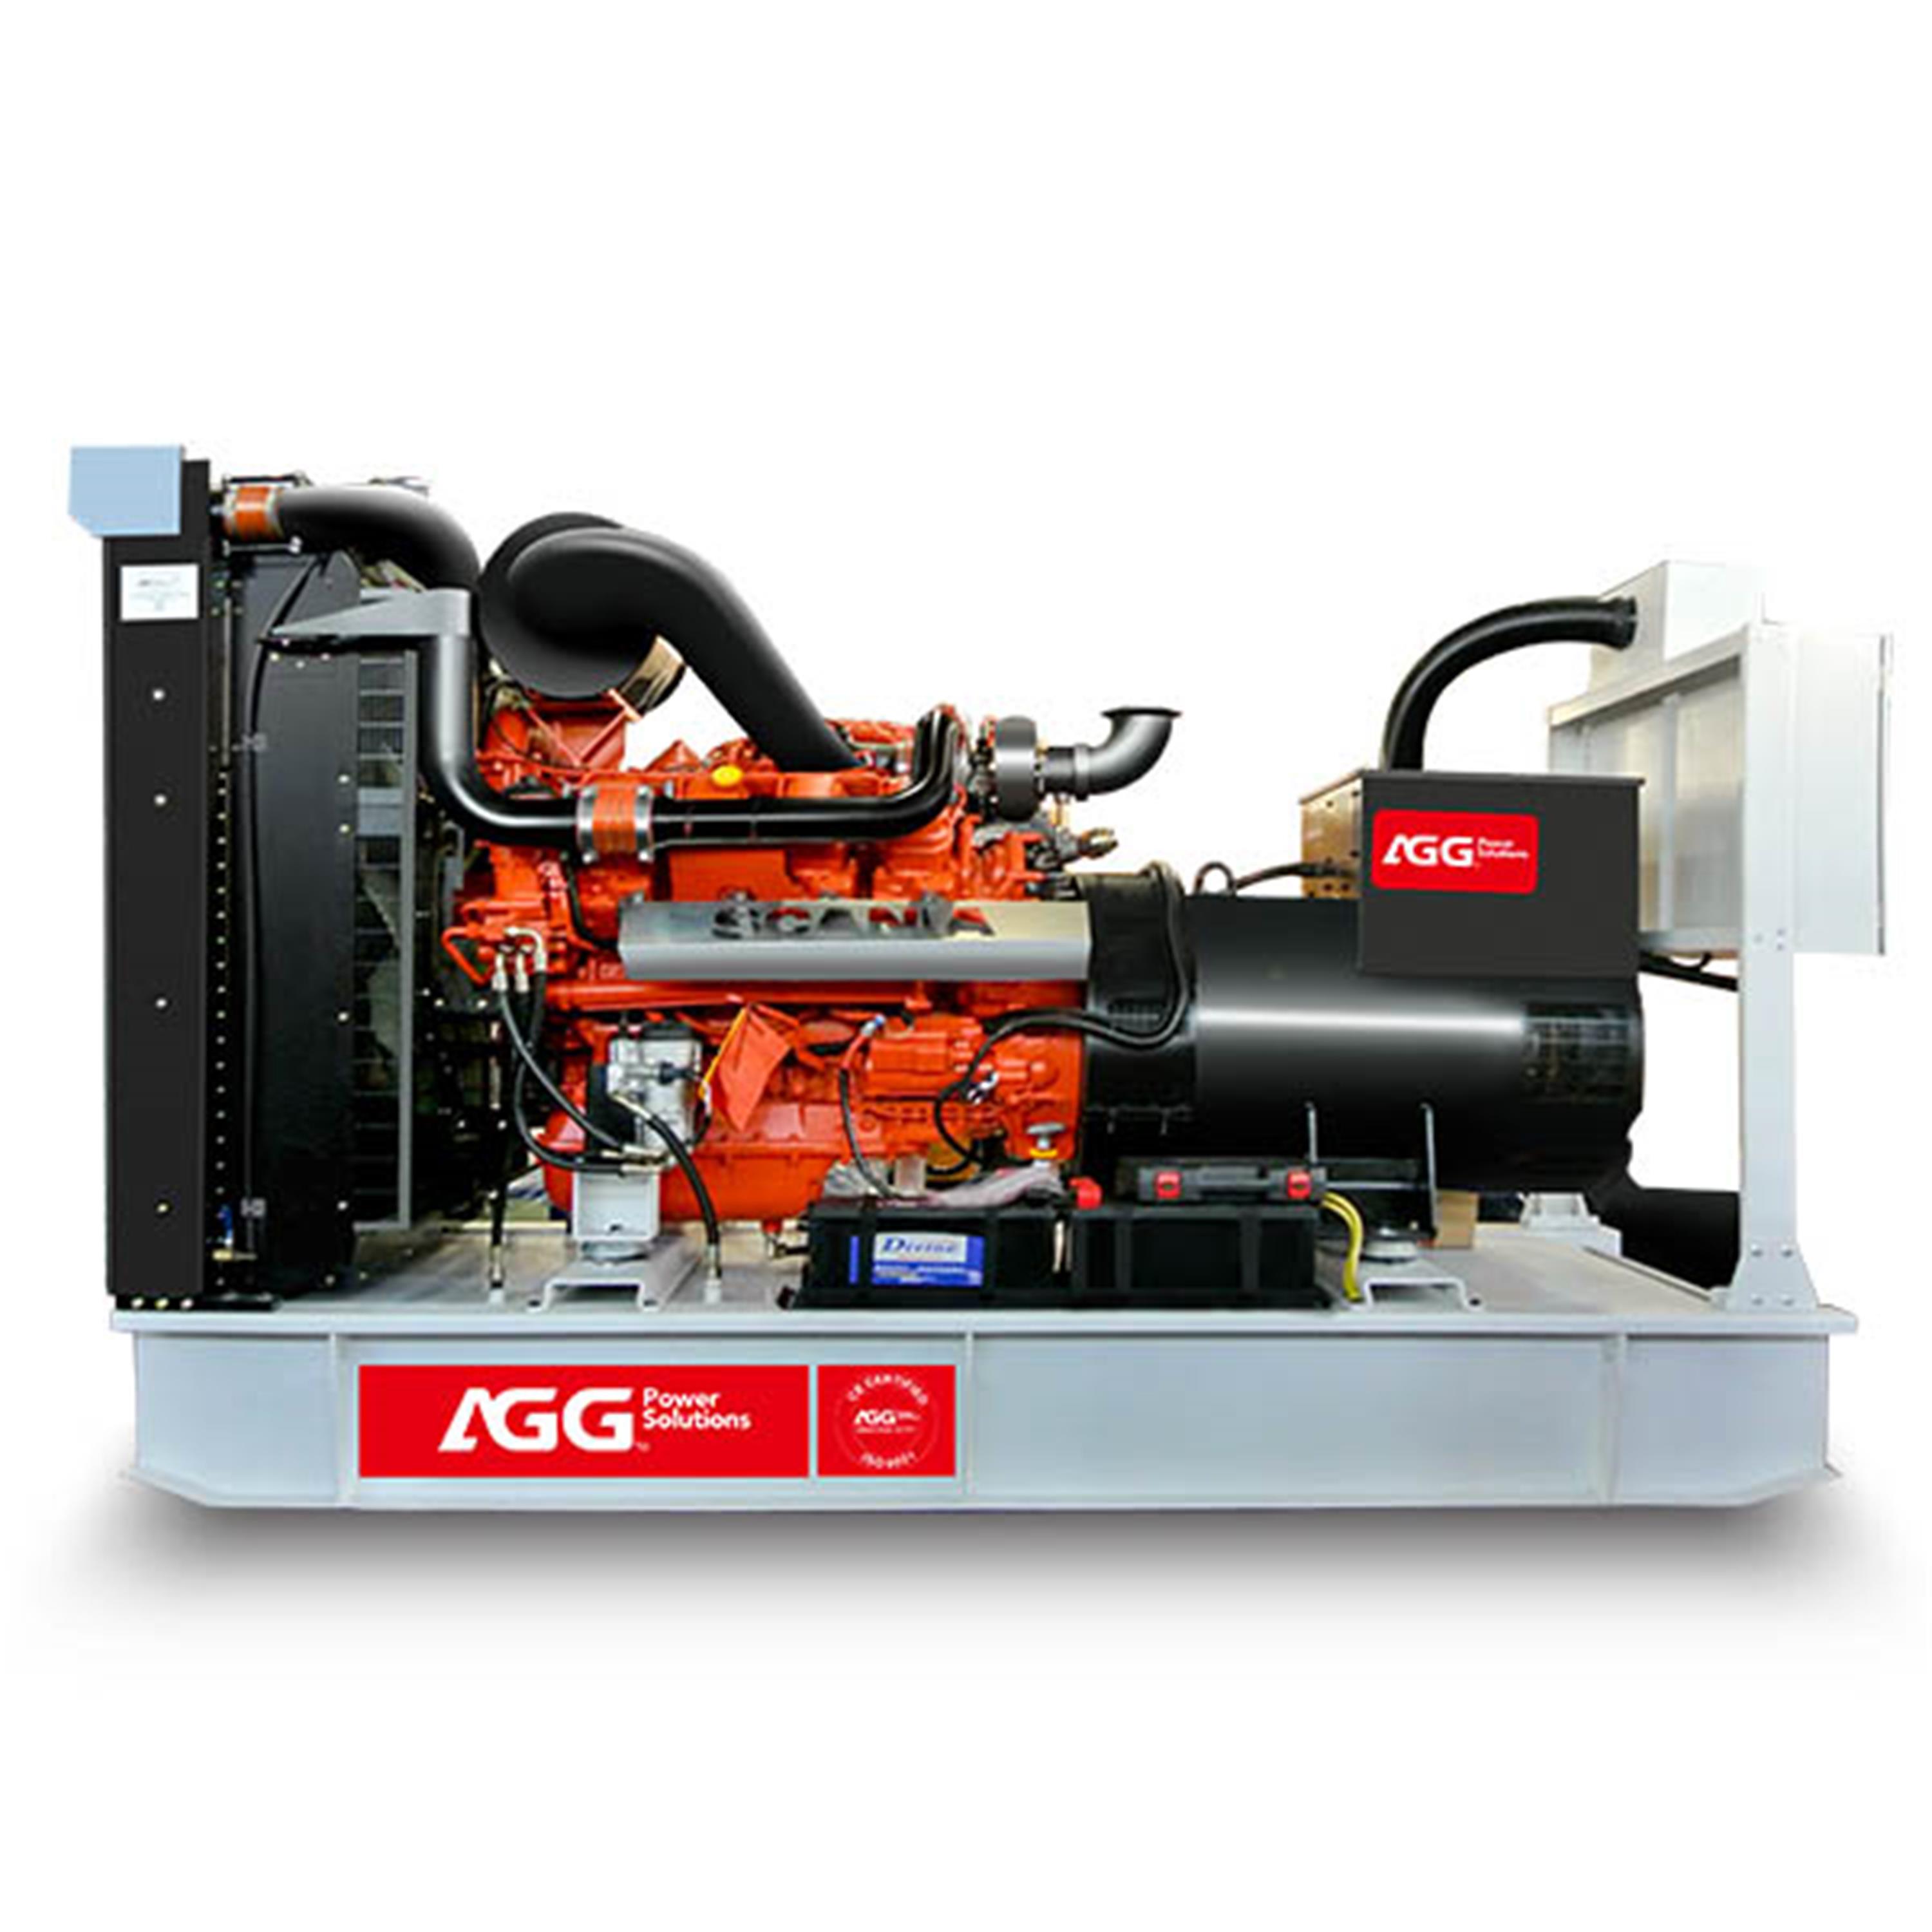 S360E5-50HZ - AGG Power Technology (UK) CO., LTD.